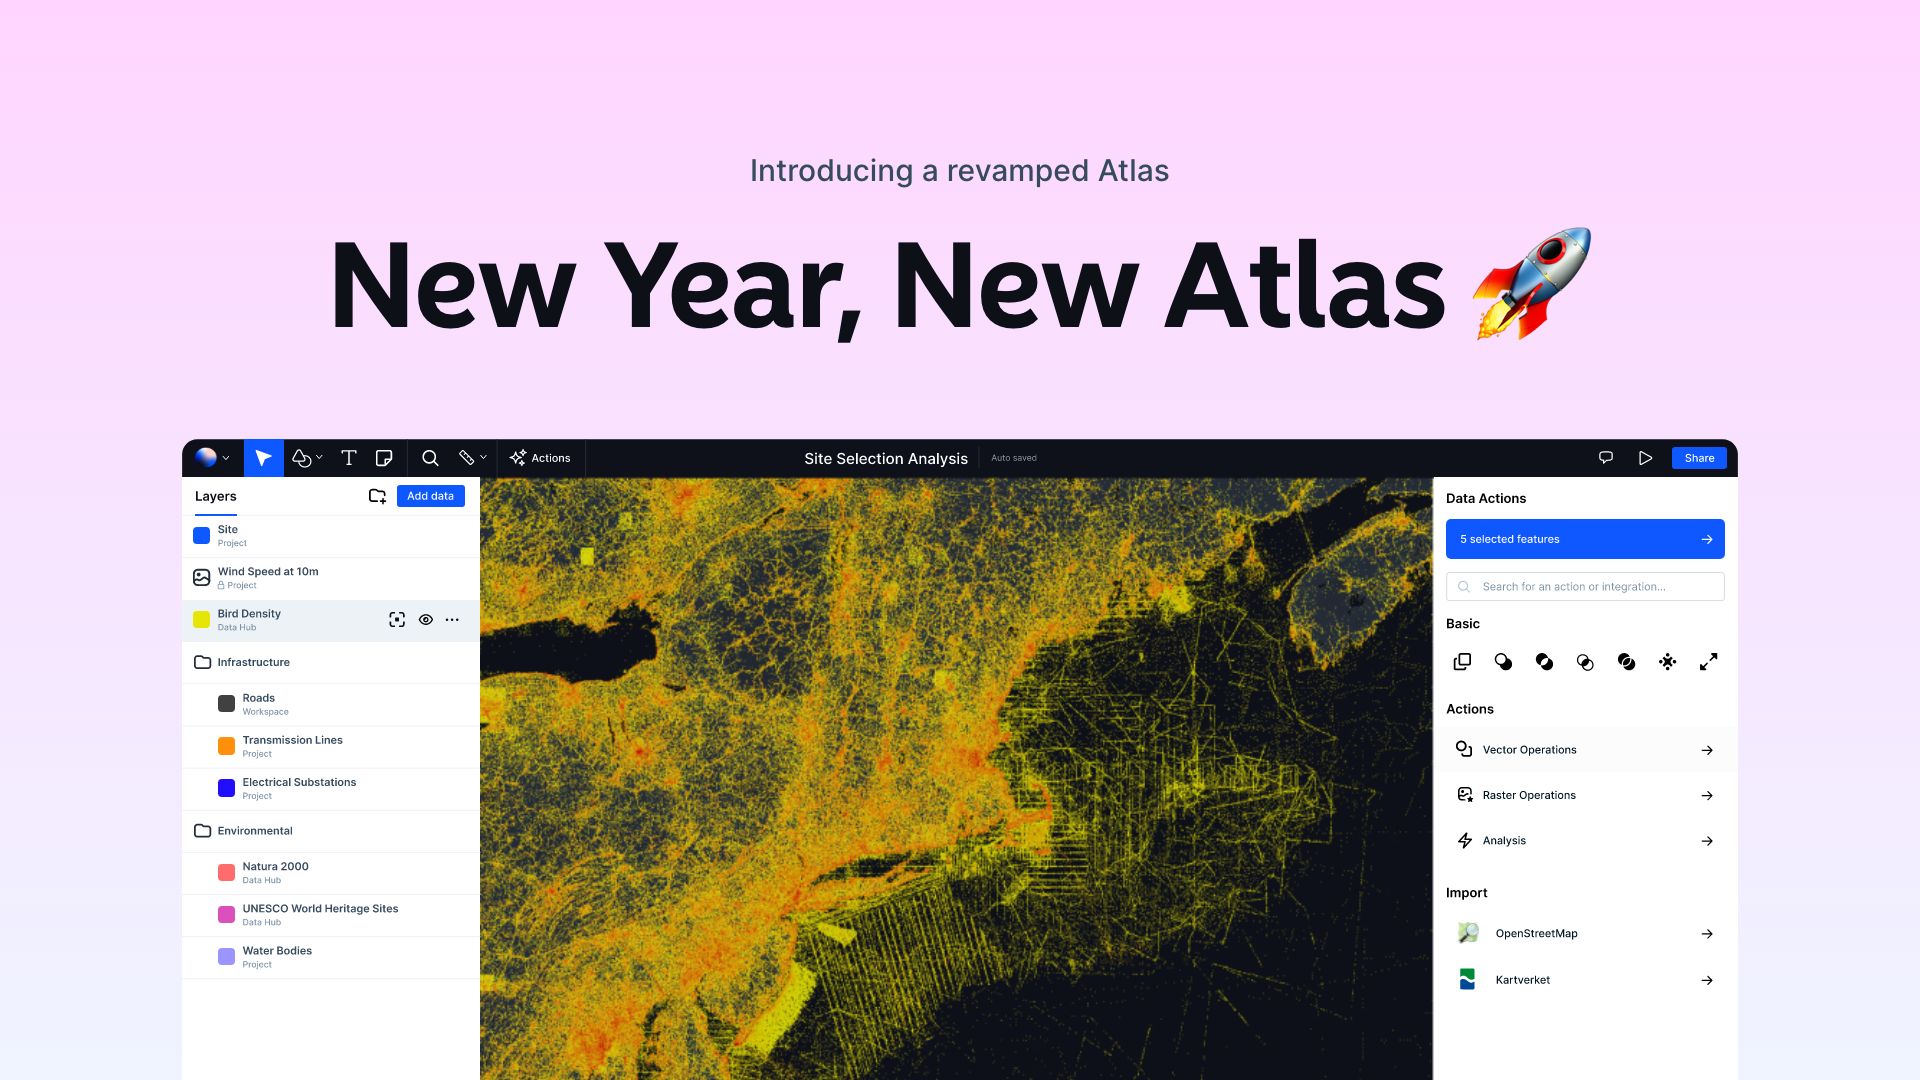 New Year, New Atlas!